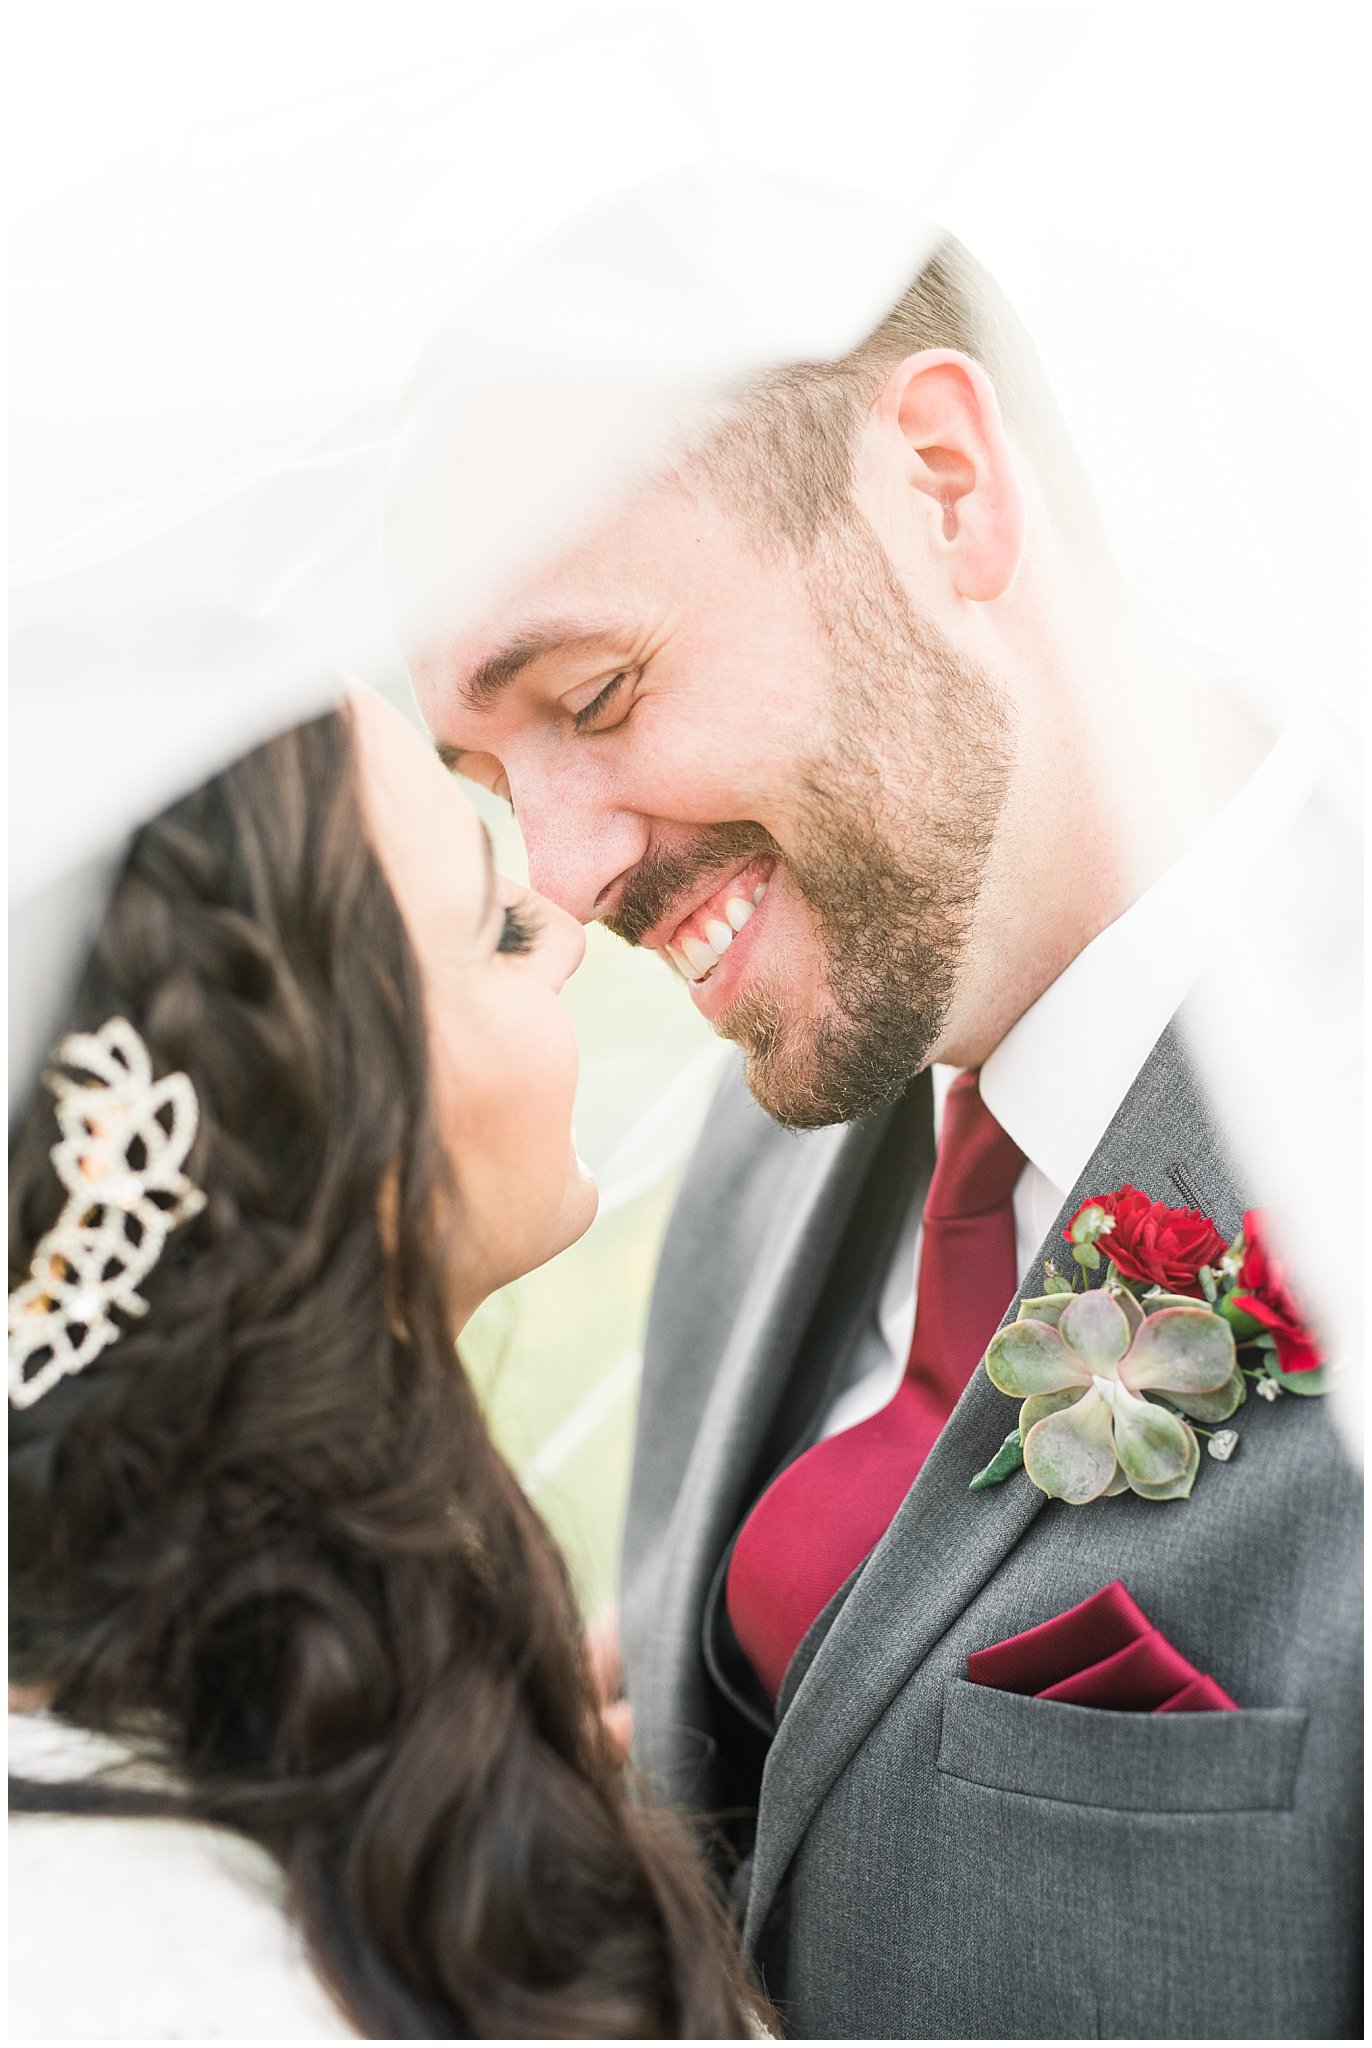 Bride and groom peak underneath veil shot during Utah mountain wedding | Top Utah Wedding and Couples Photos 2019 | Jessie and Dallin Photography